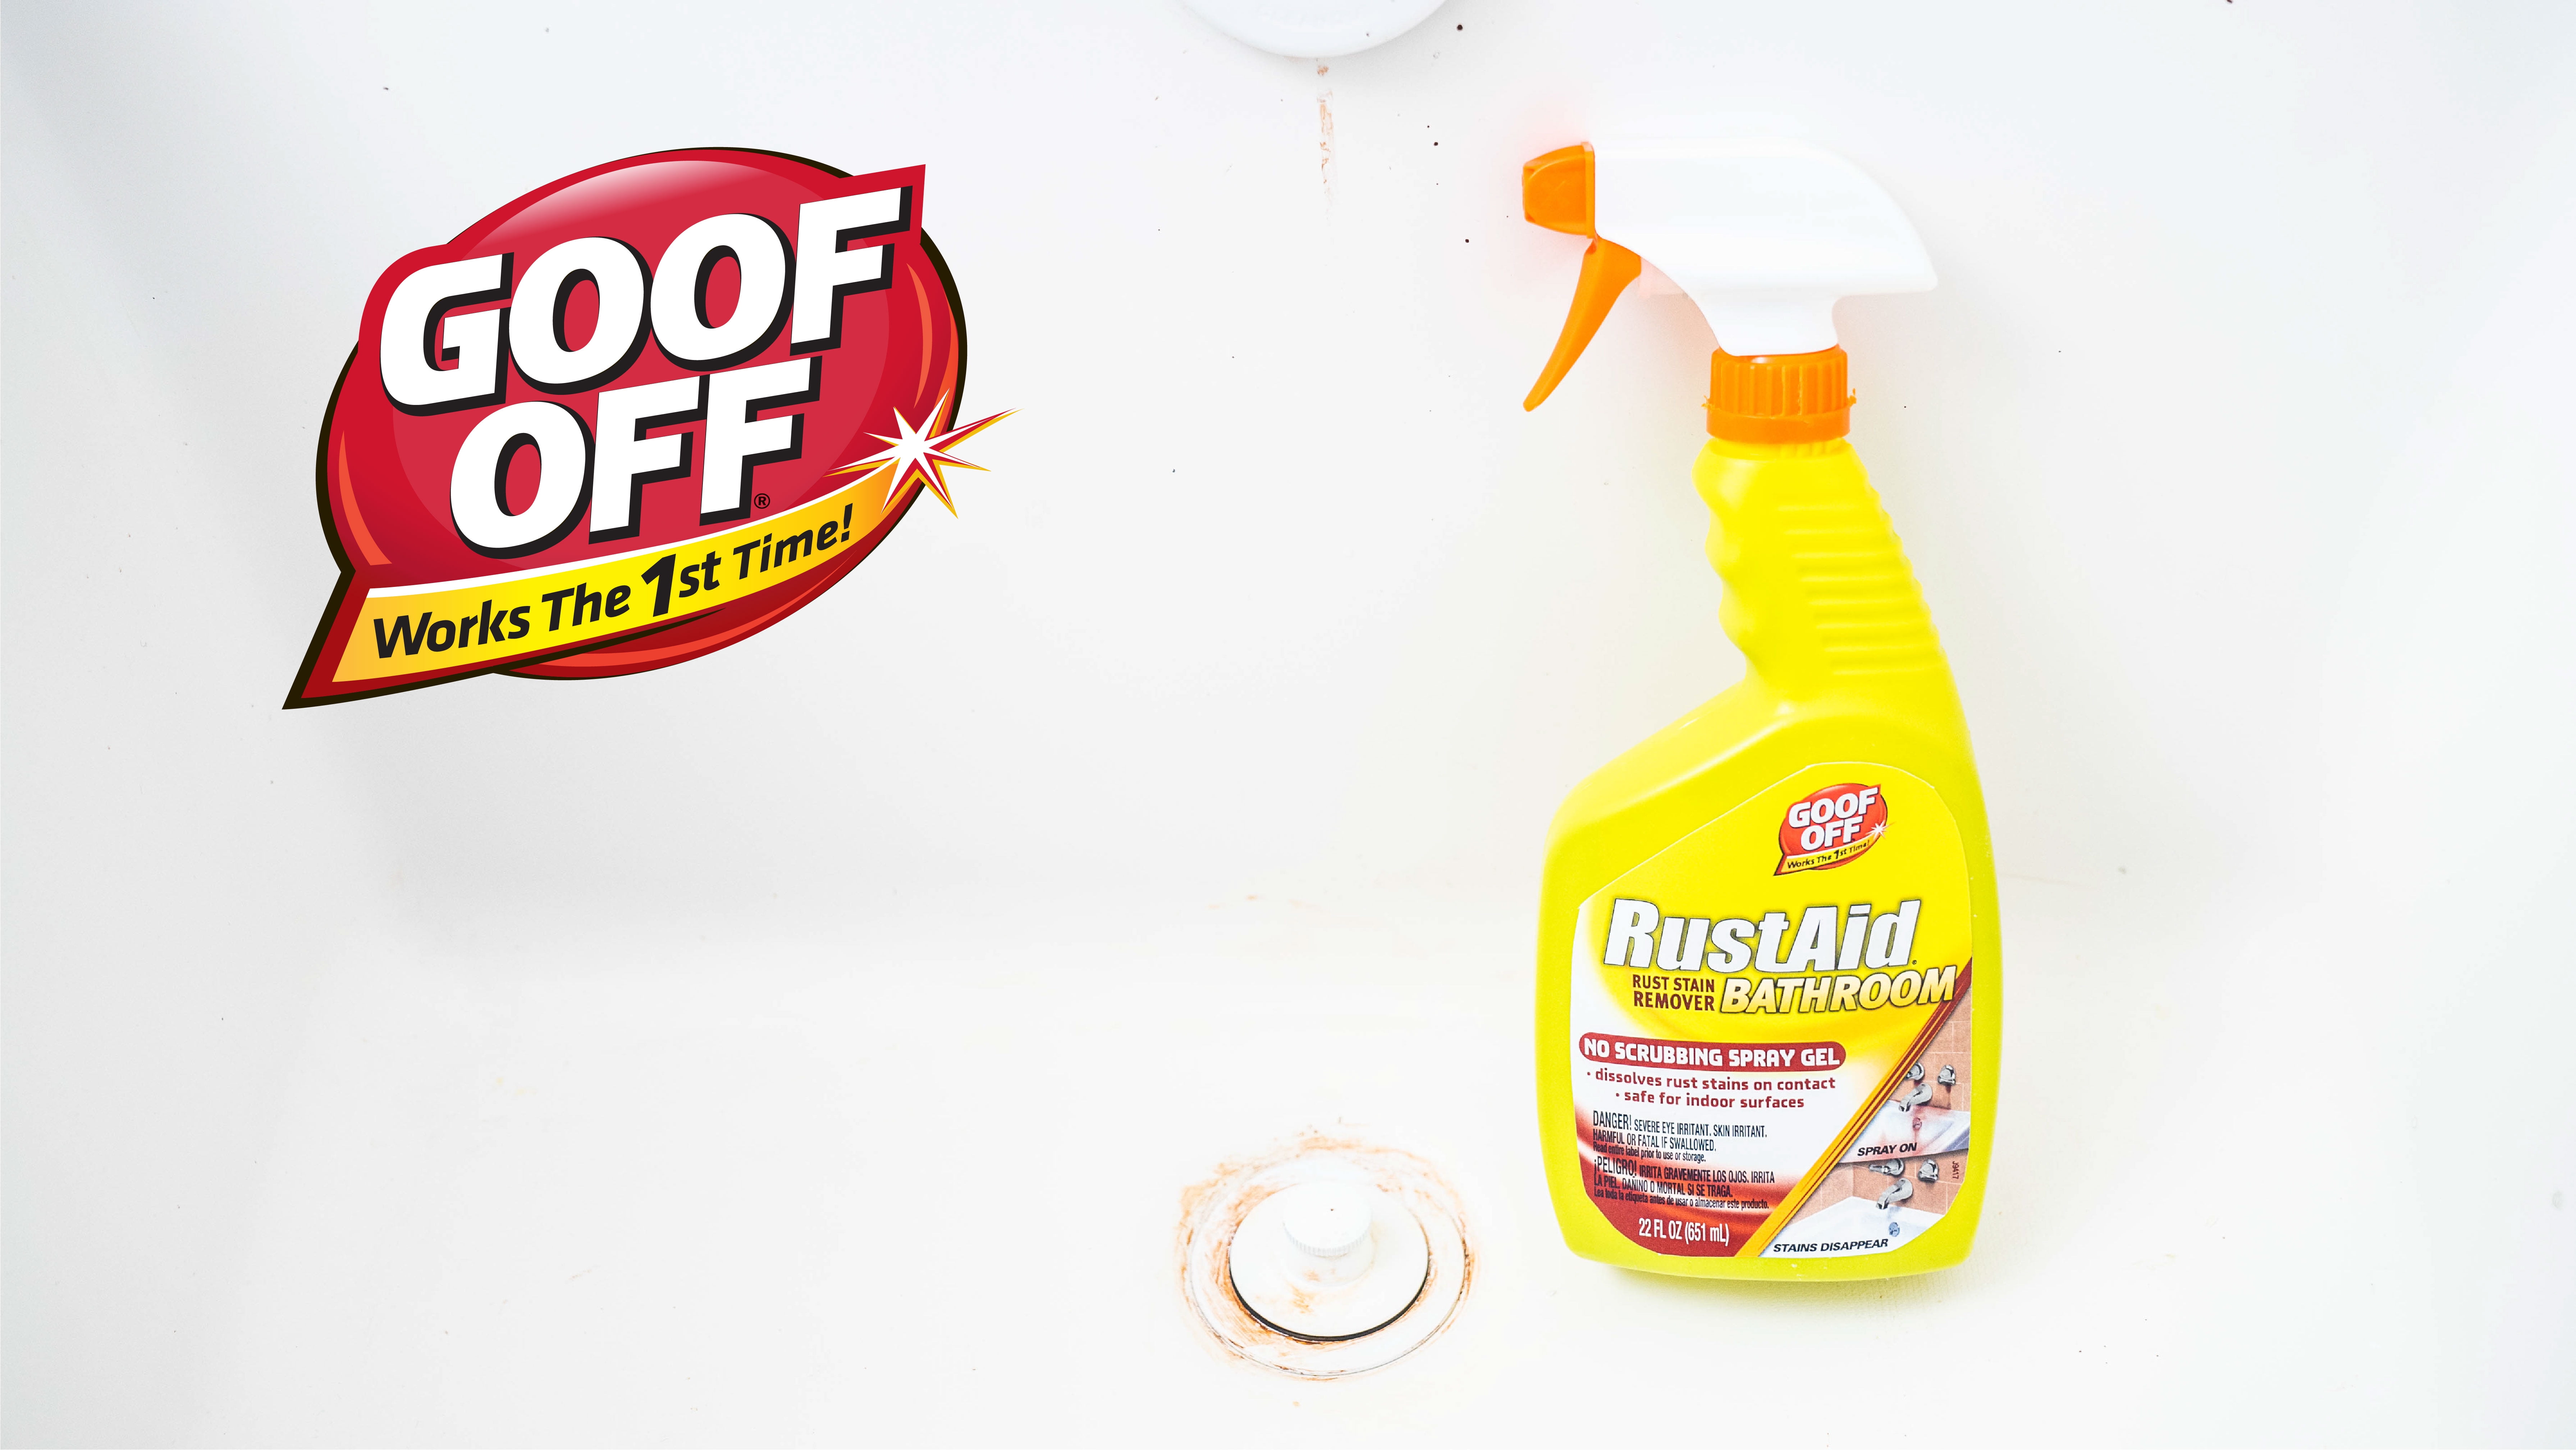 22 oz. Indoor Rust Stain Remover Spray